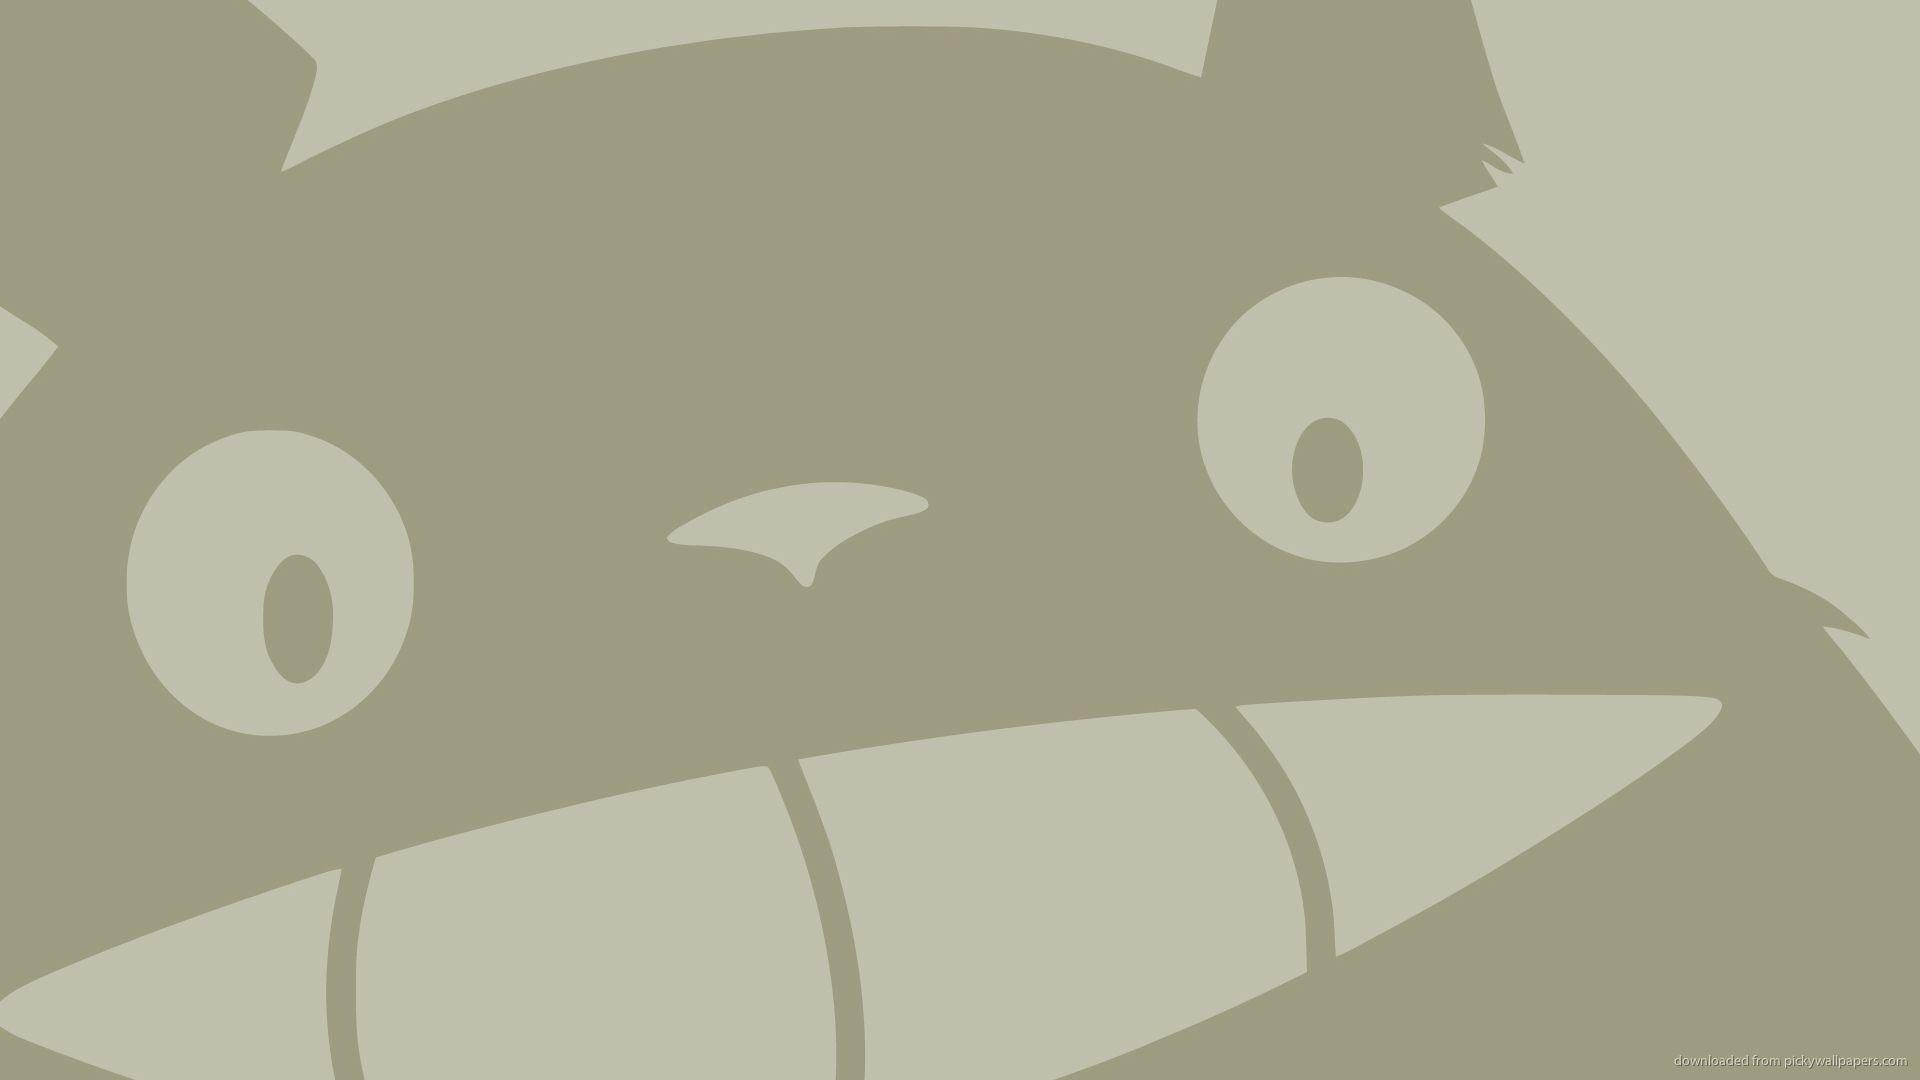 Download 1920x1080 Totoro Big Portrait Wallpaper